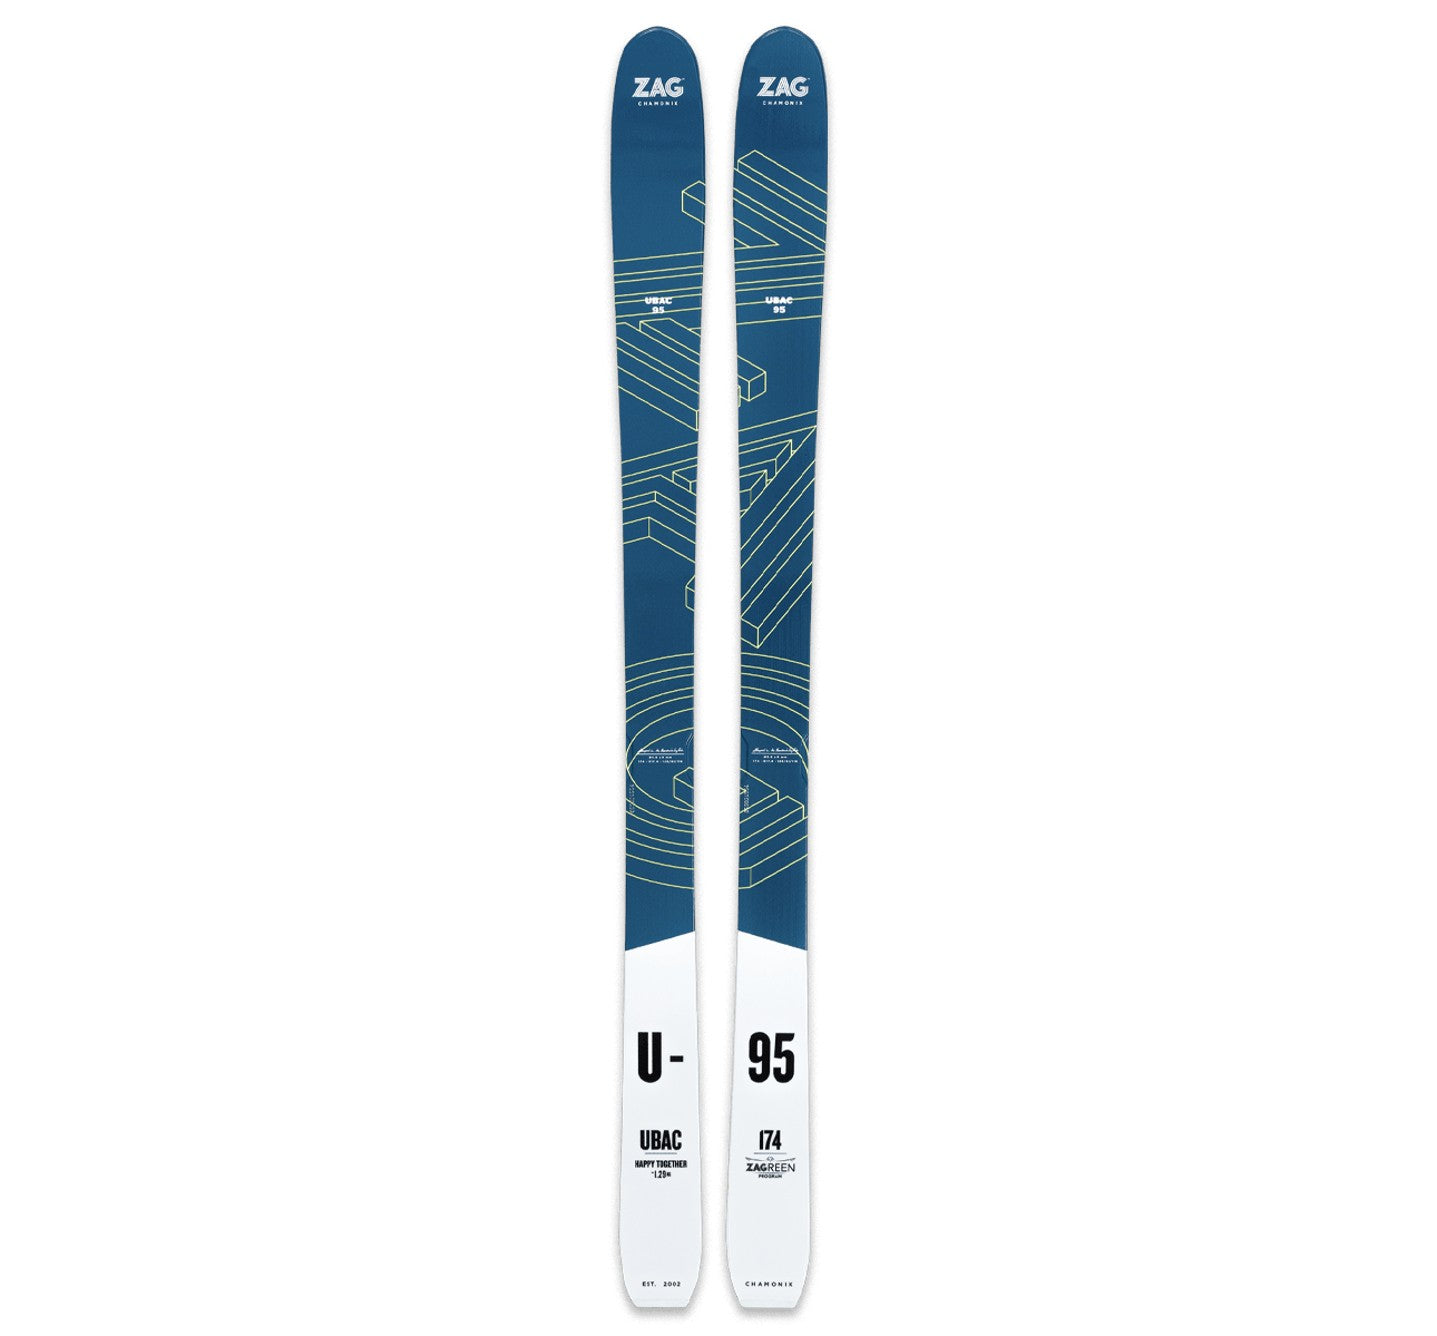 Touring skis blue and yellow Zag UBAC 95